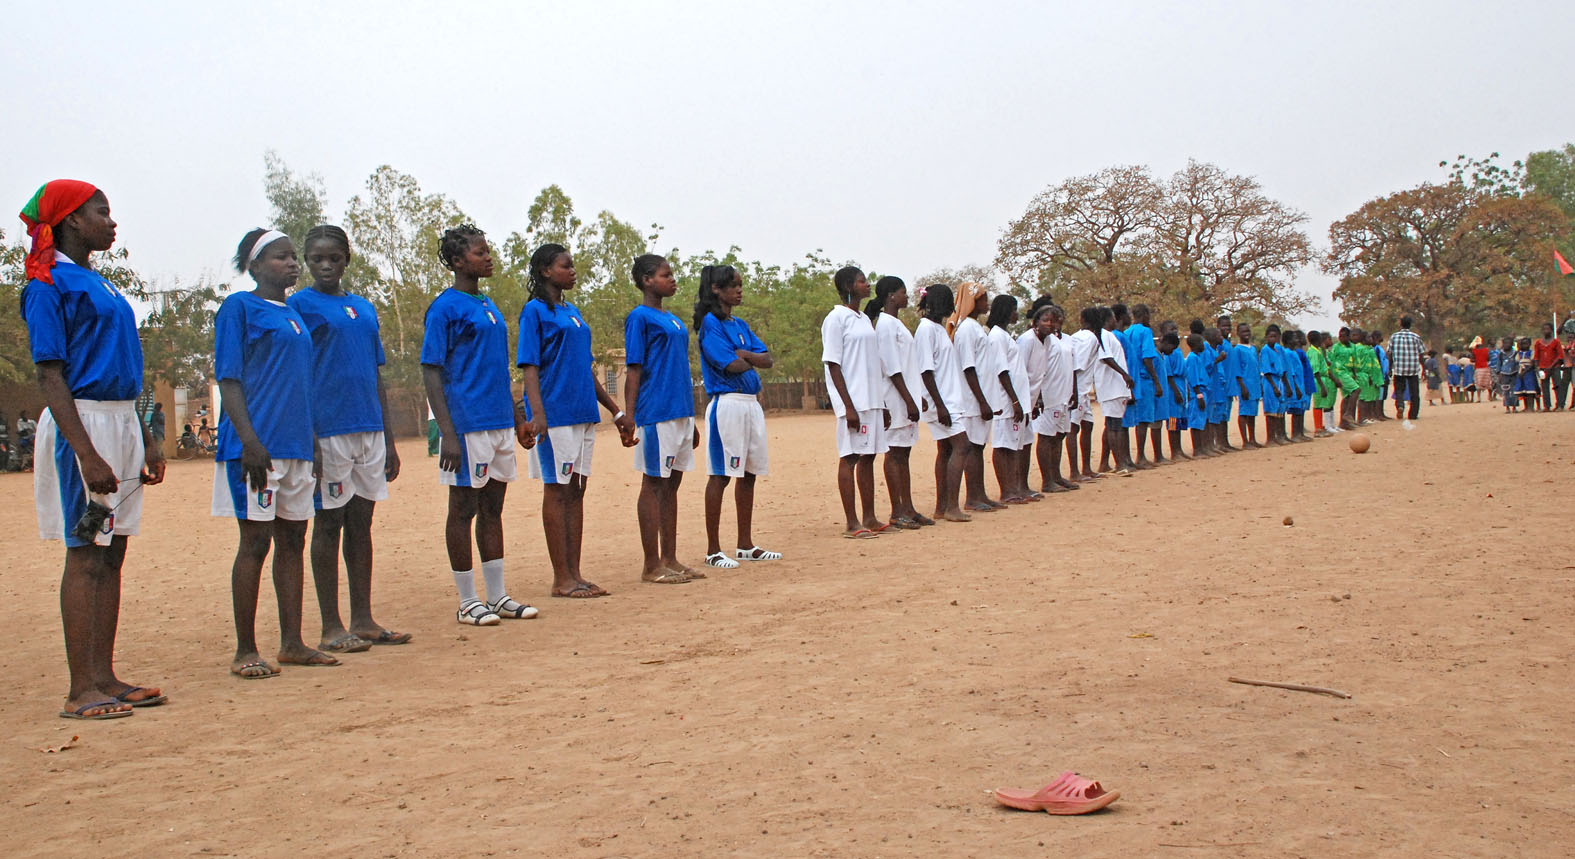 Frauenfußball in Kamerun (c) Walter Korn